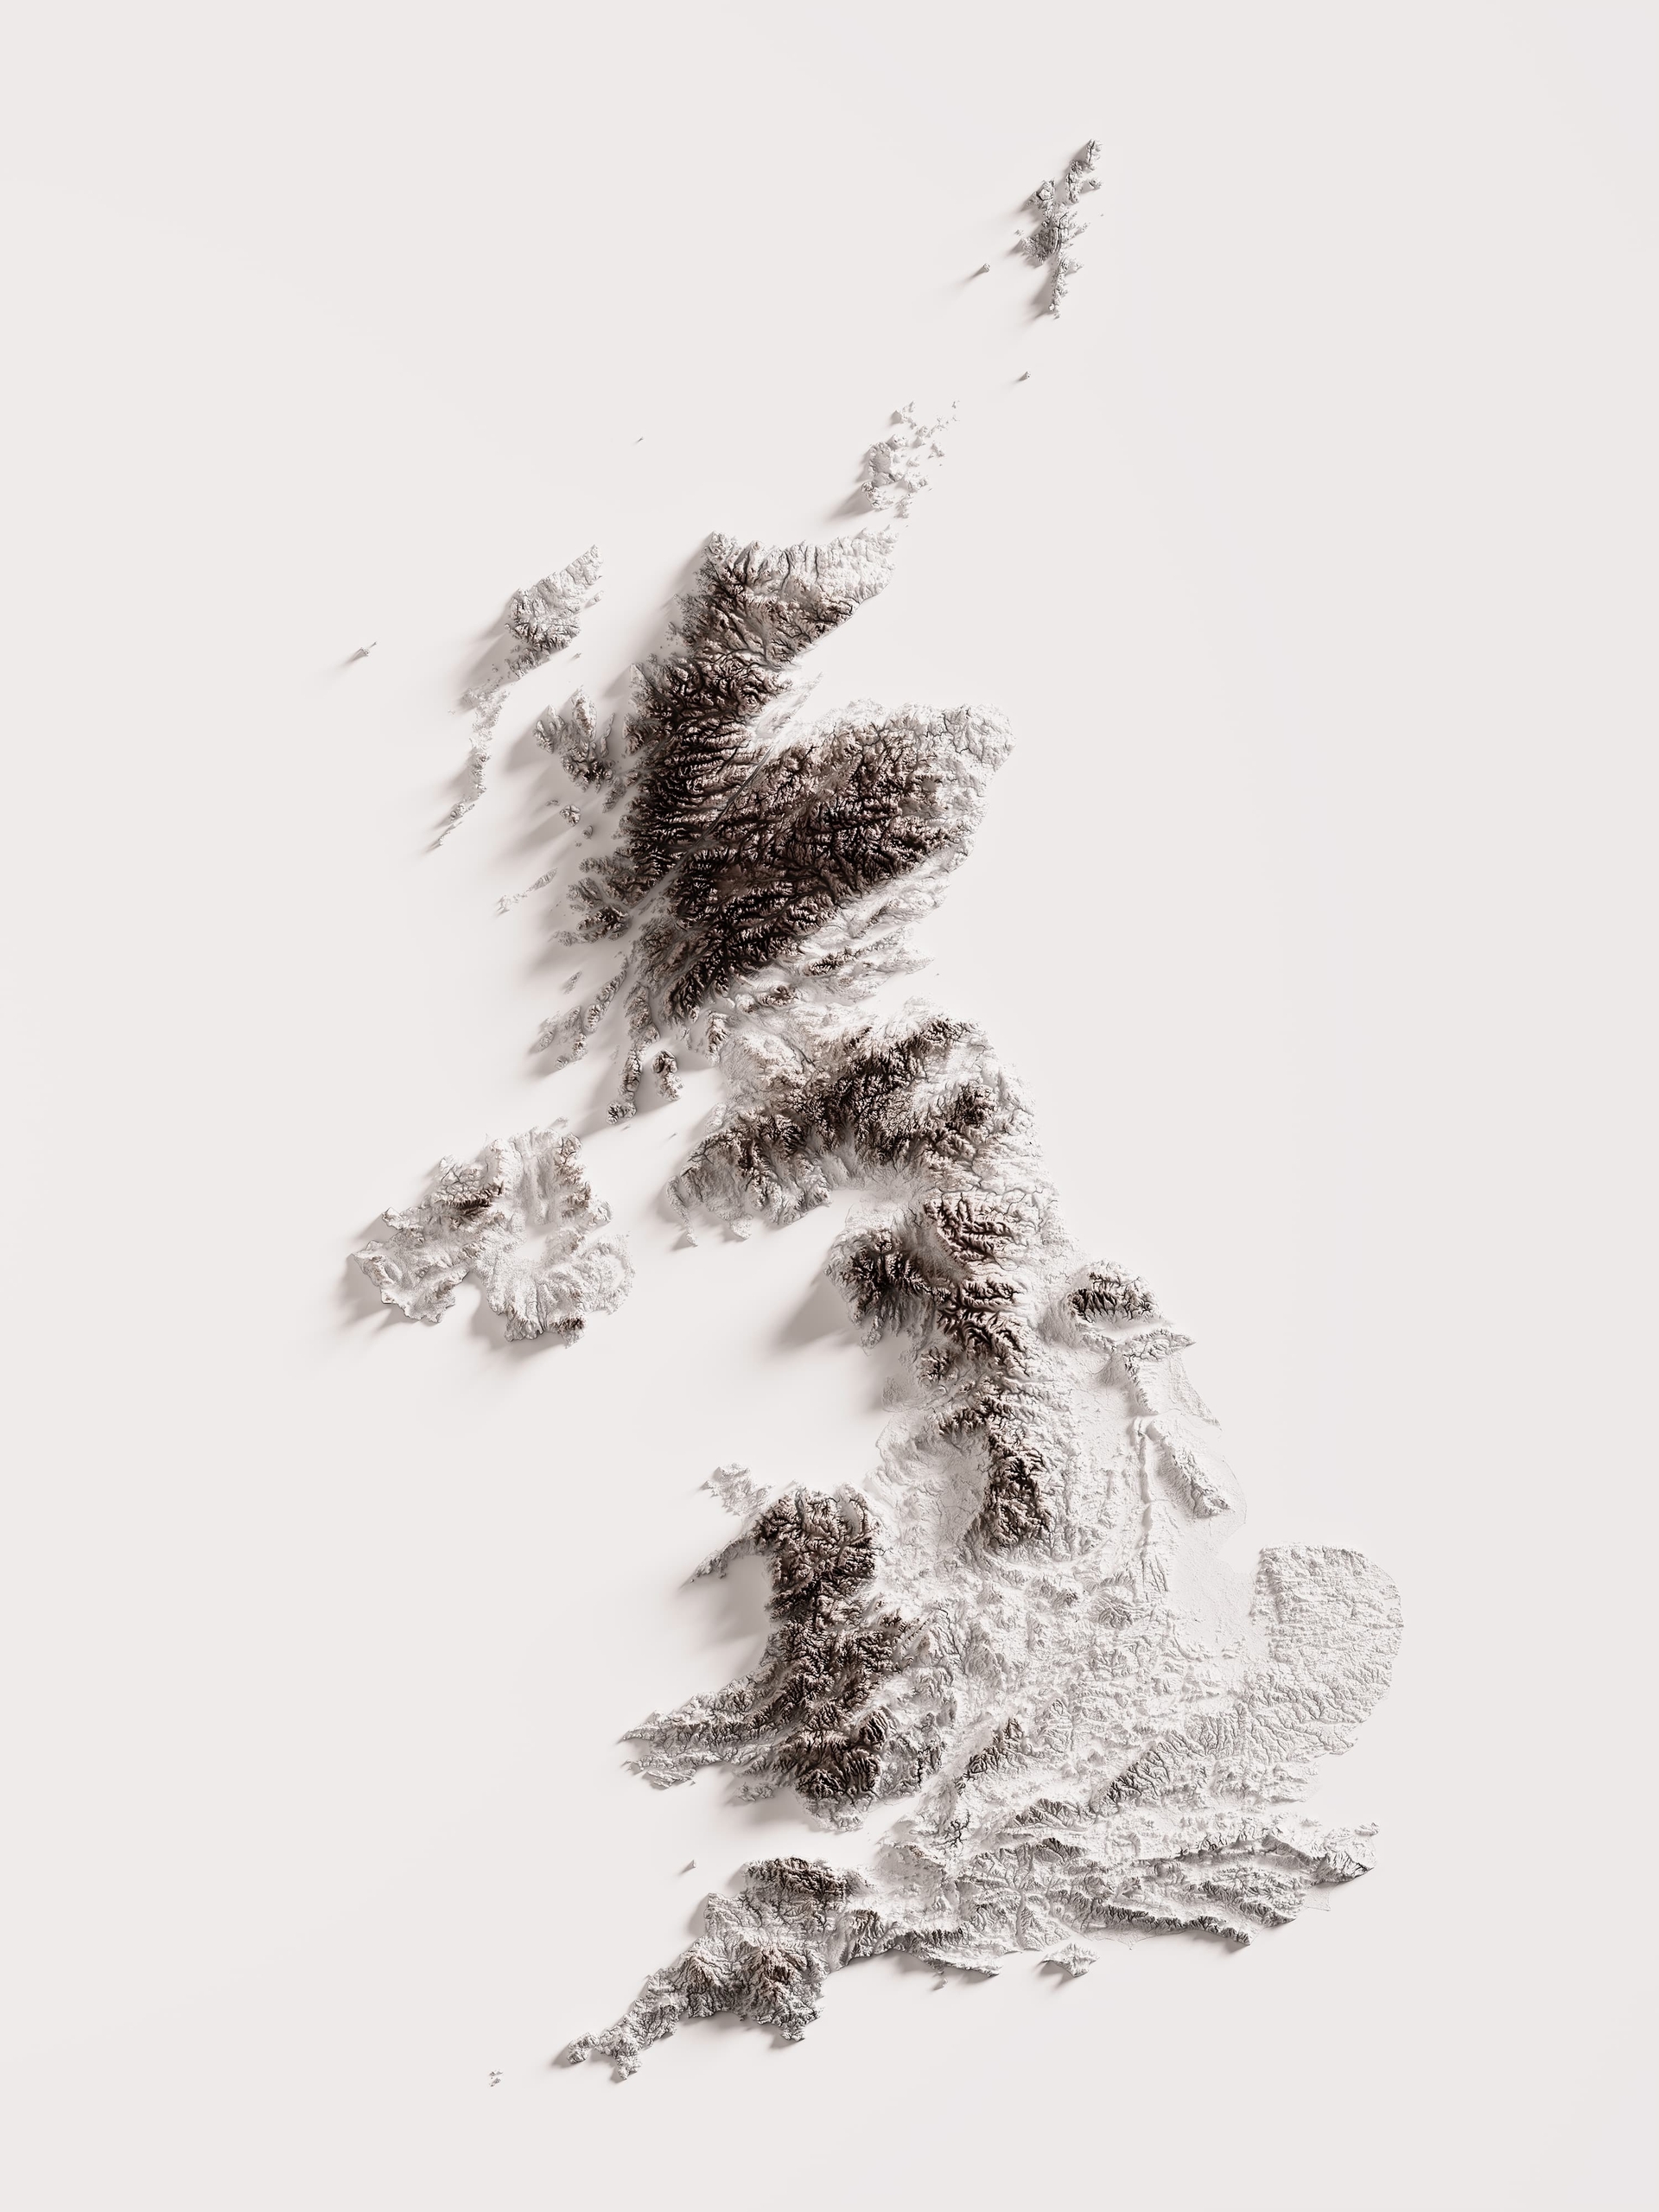 United Kingdom | Hypsometric tint - White